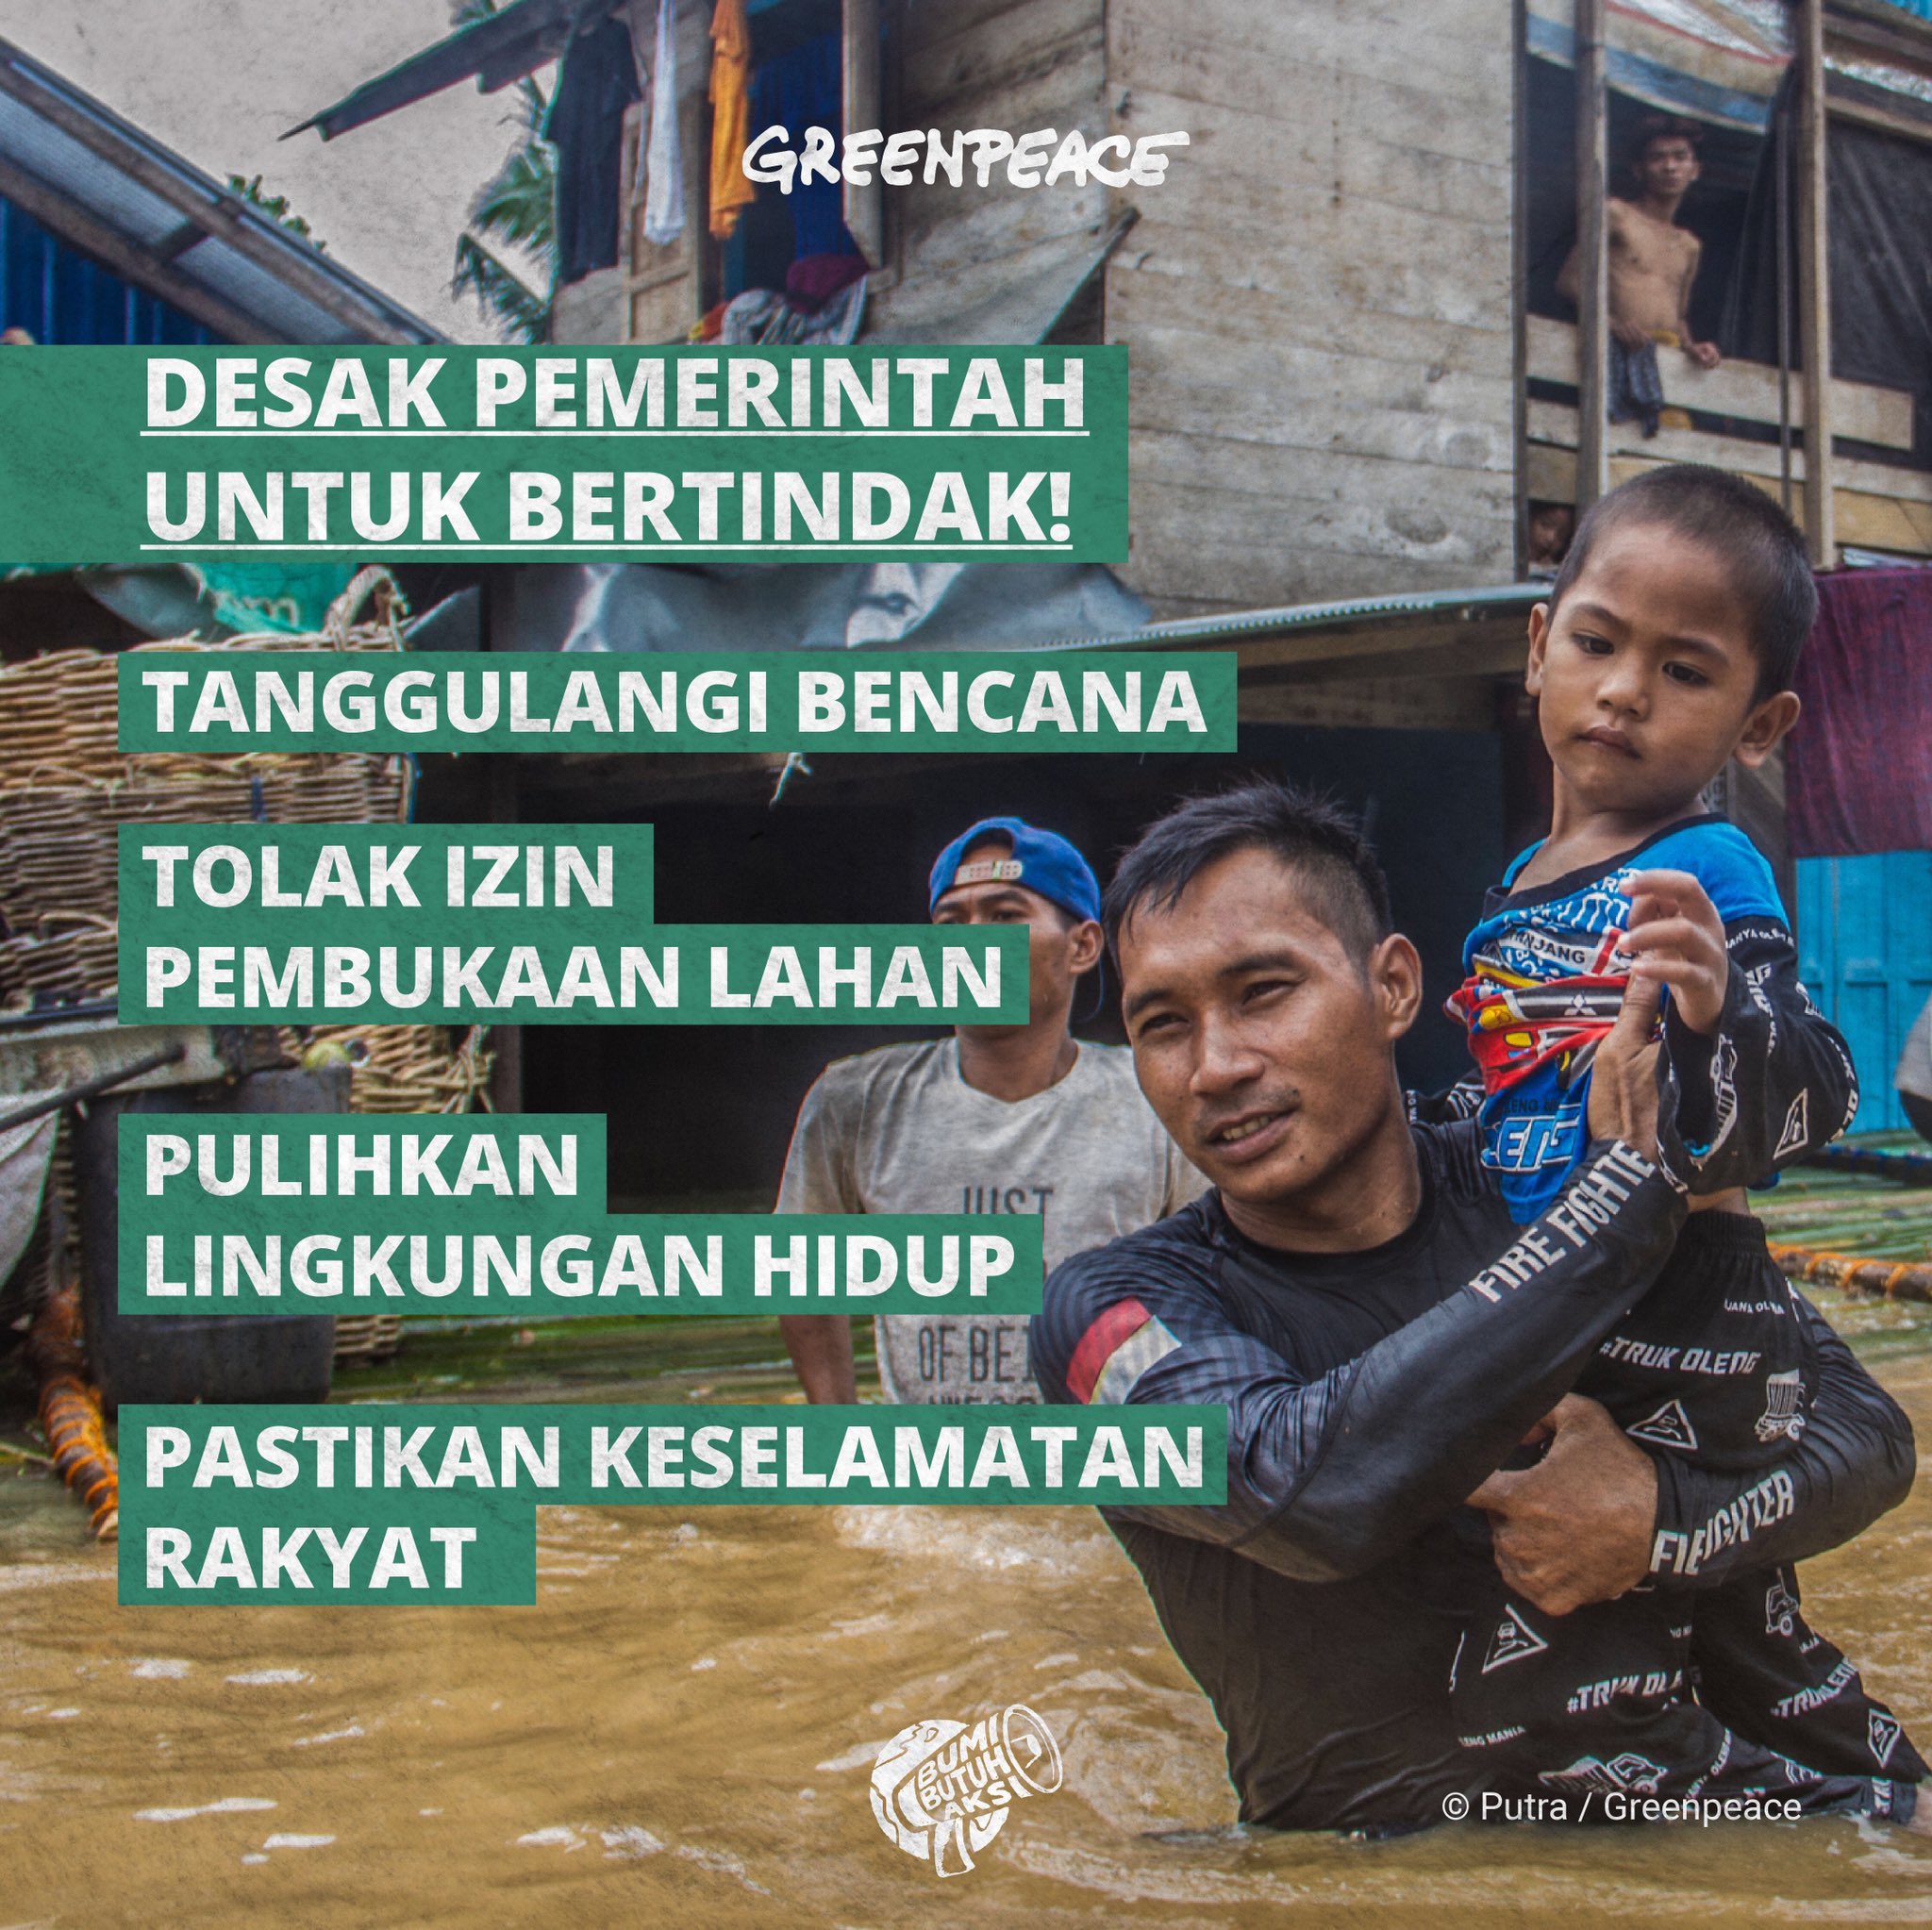 Greenpeace Indonesia Desak Pemprov Kalsel Pulihkan Lingkungan